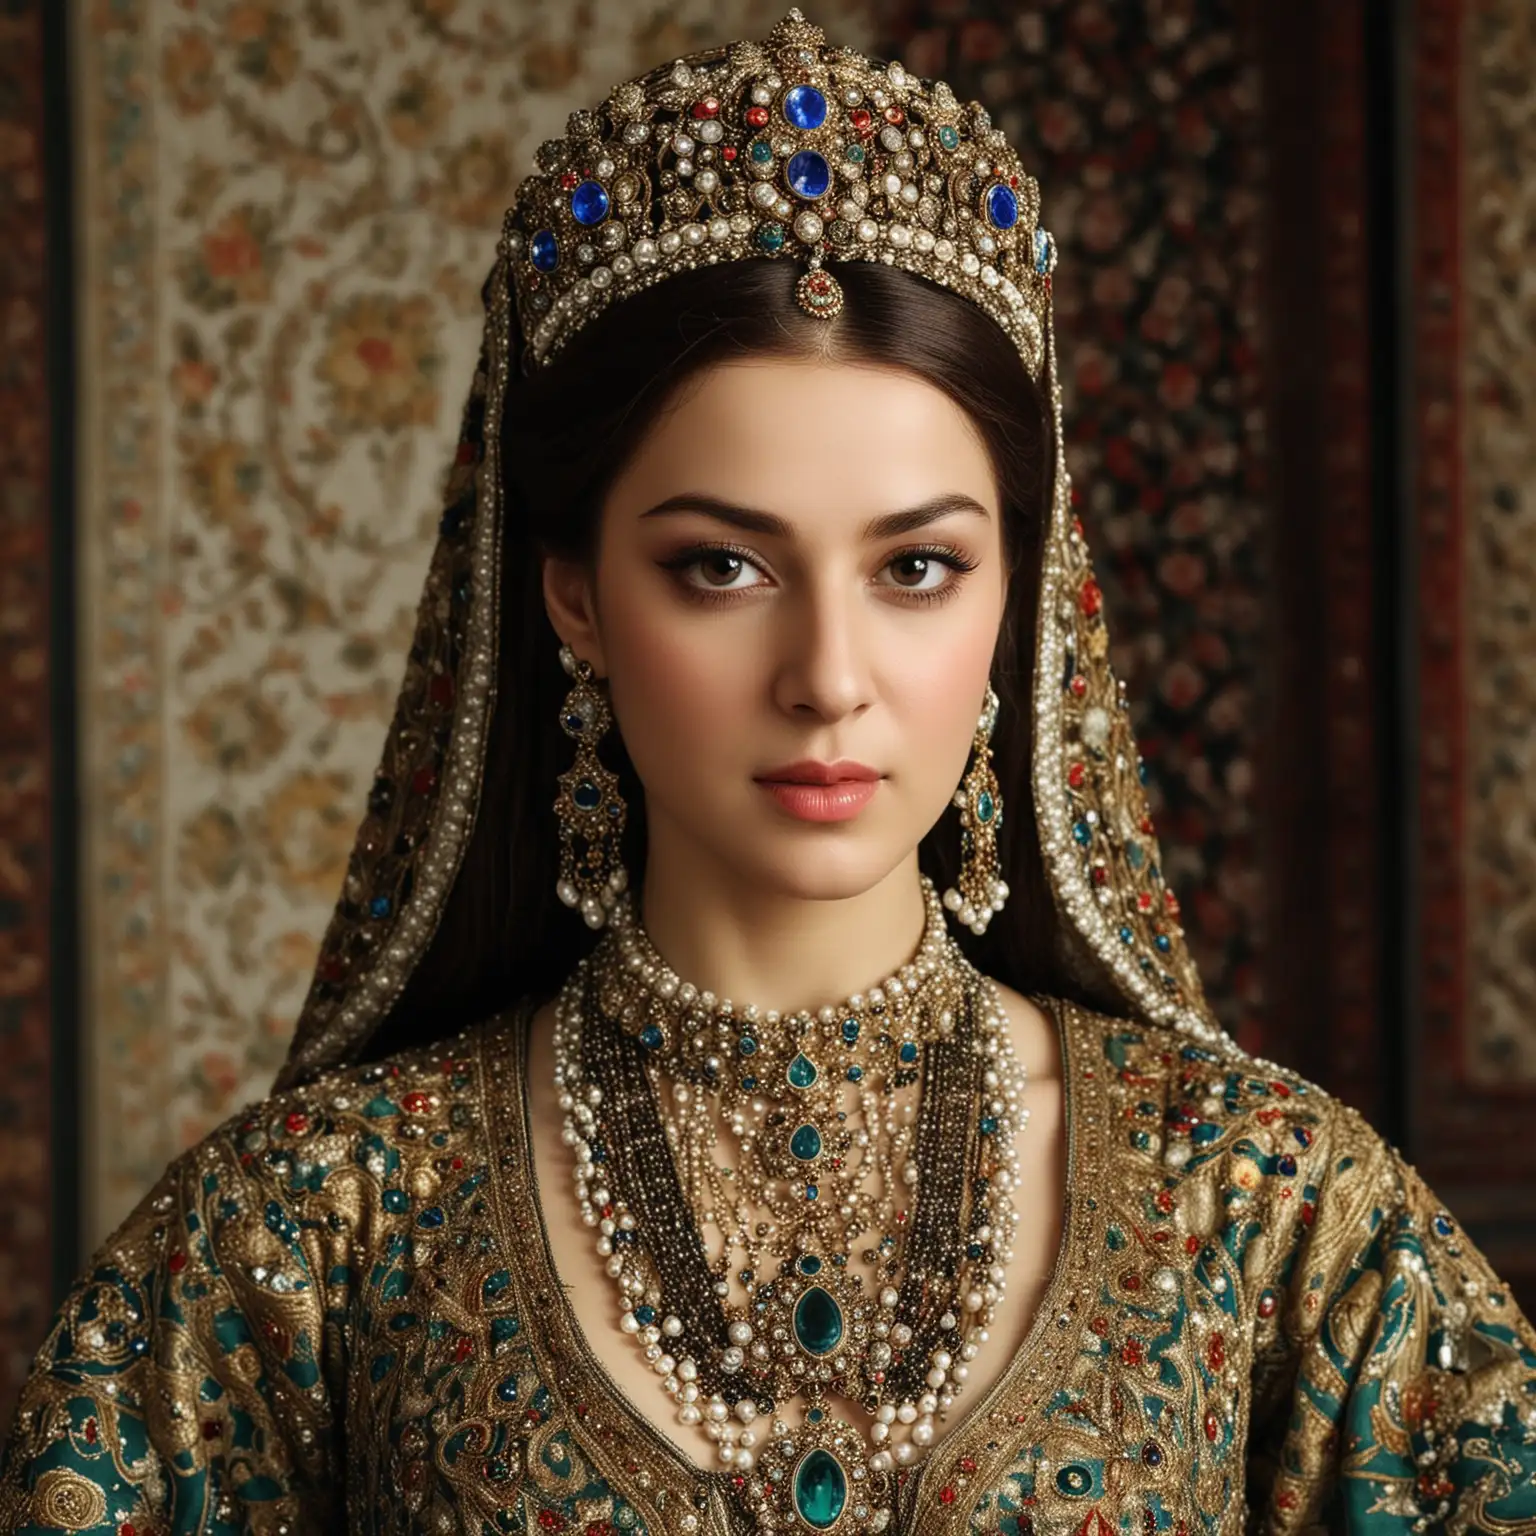 Regal-and-Commanding-Ksem-Sultan-Portrait-of-Power-and-Sophistication